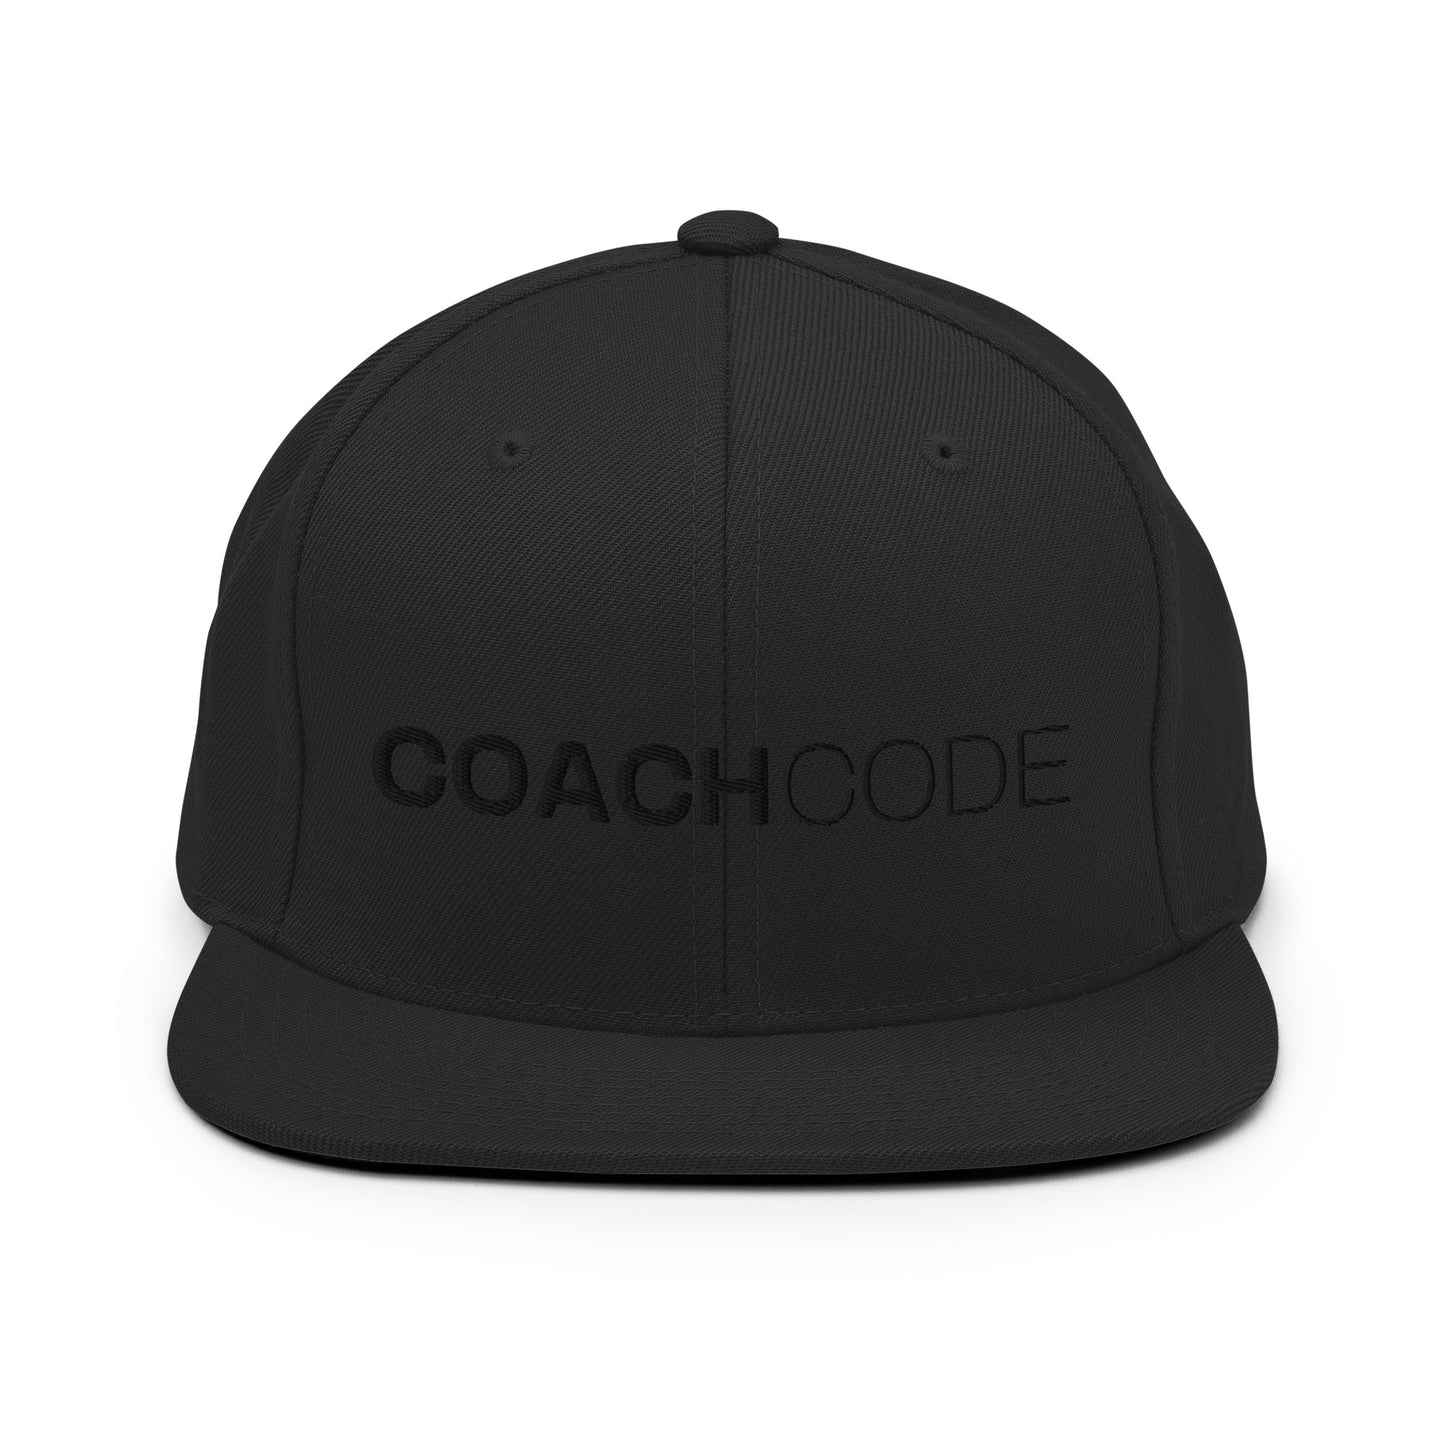 Coach Code Black on Black Snapback Hat